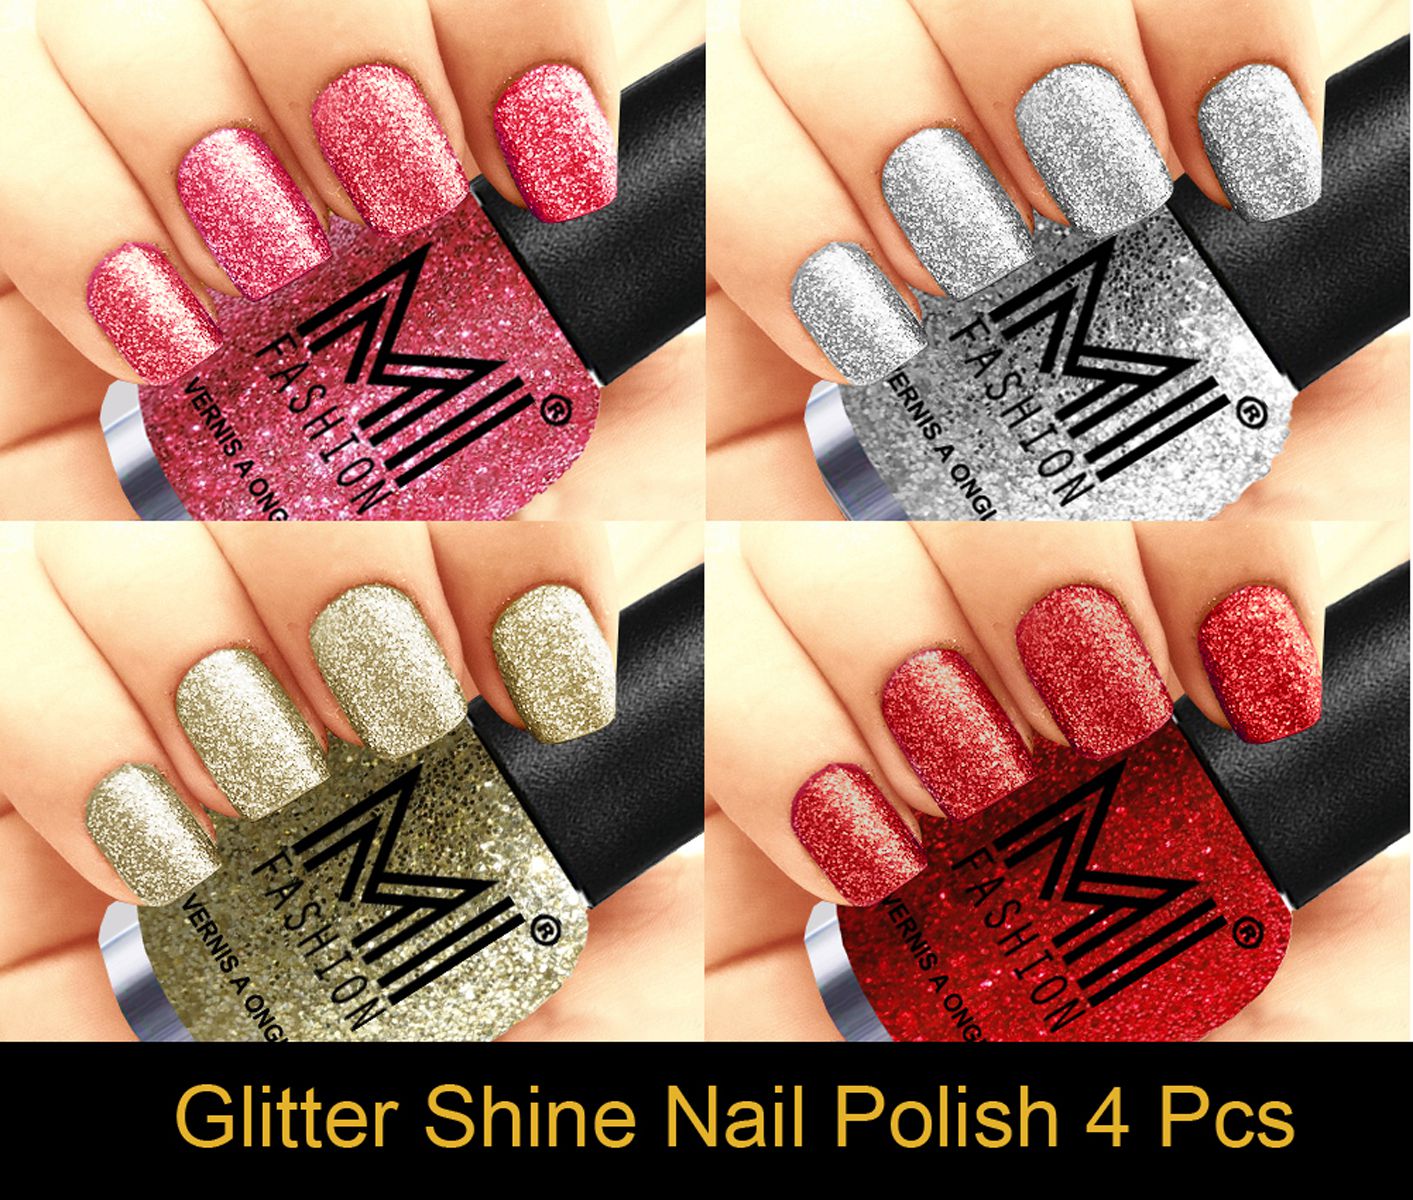 MI FASHION Long Lasting Professional Glitter Nail Polish Pink,Silver,Silver Gold,Red Glitter Pack of 4 mL